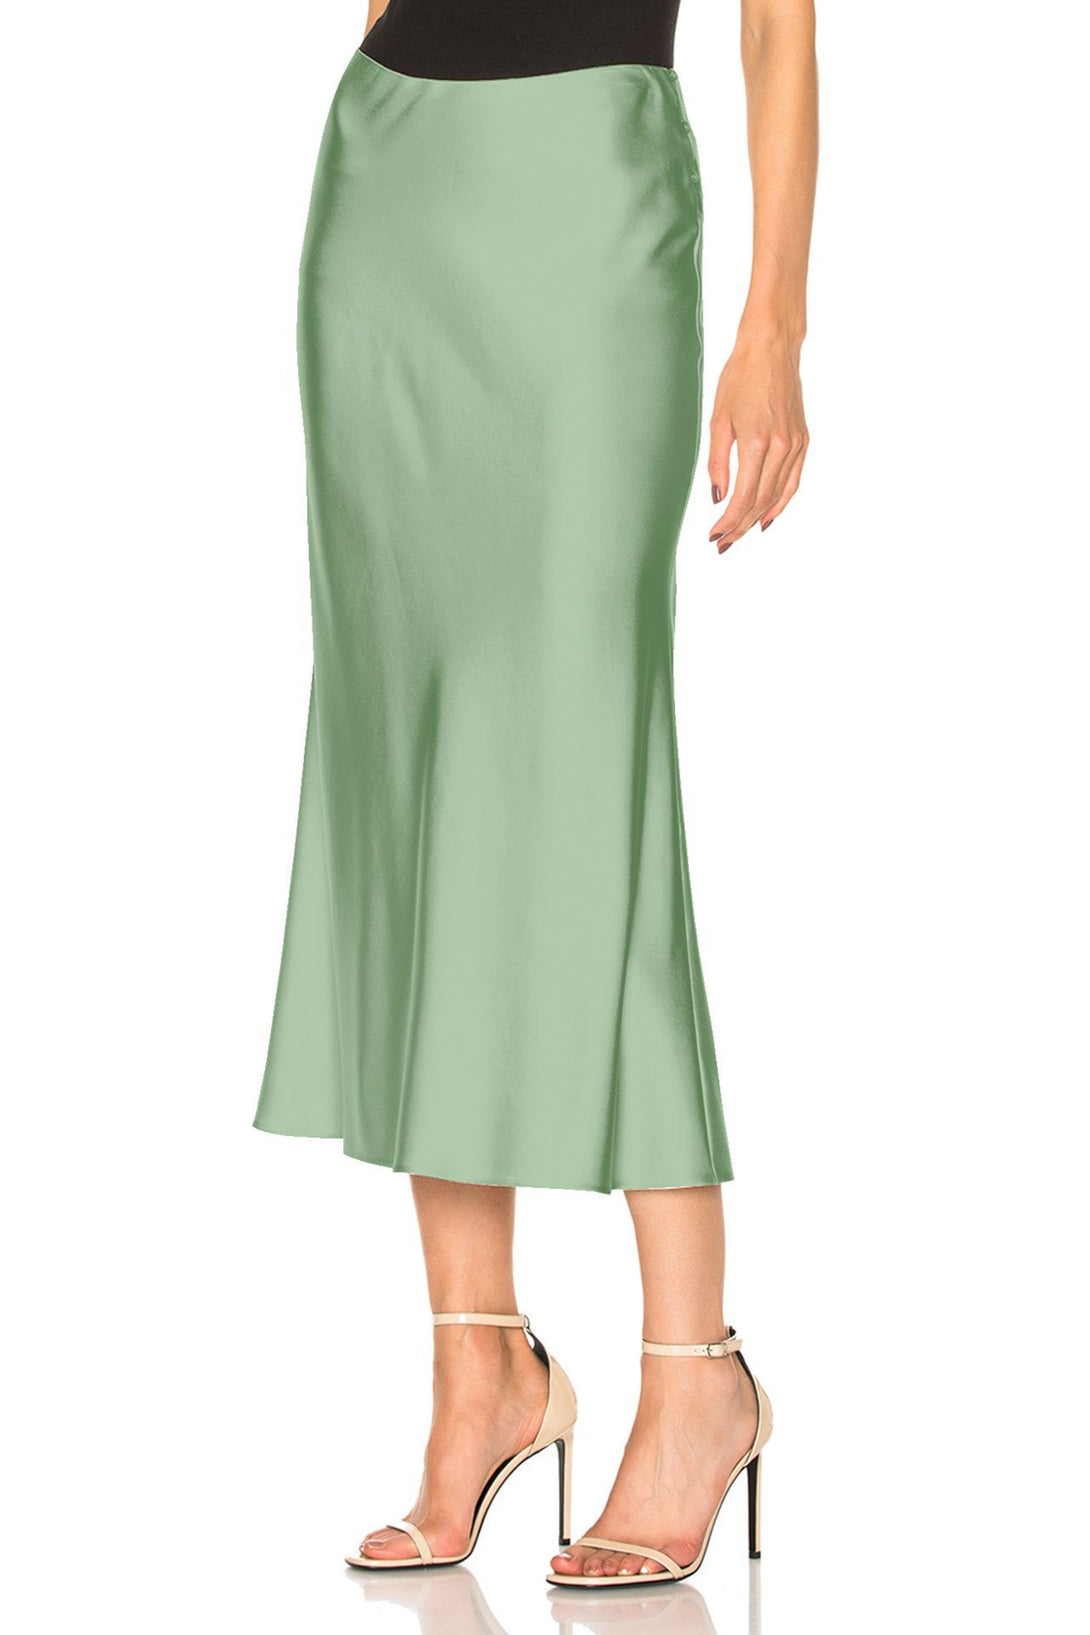 Designer-Silk-Skirt-In-Mint-For-Womens-By-Kyle